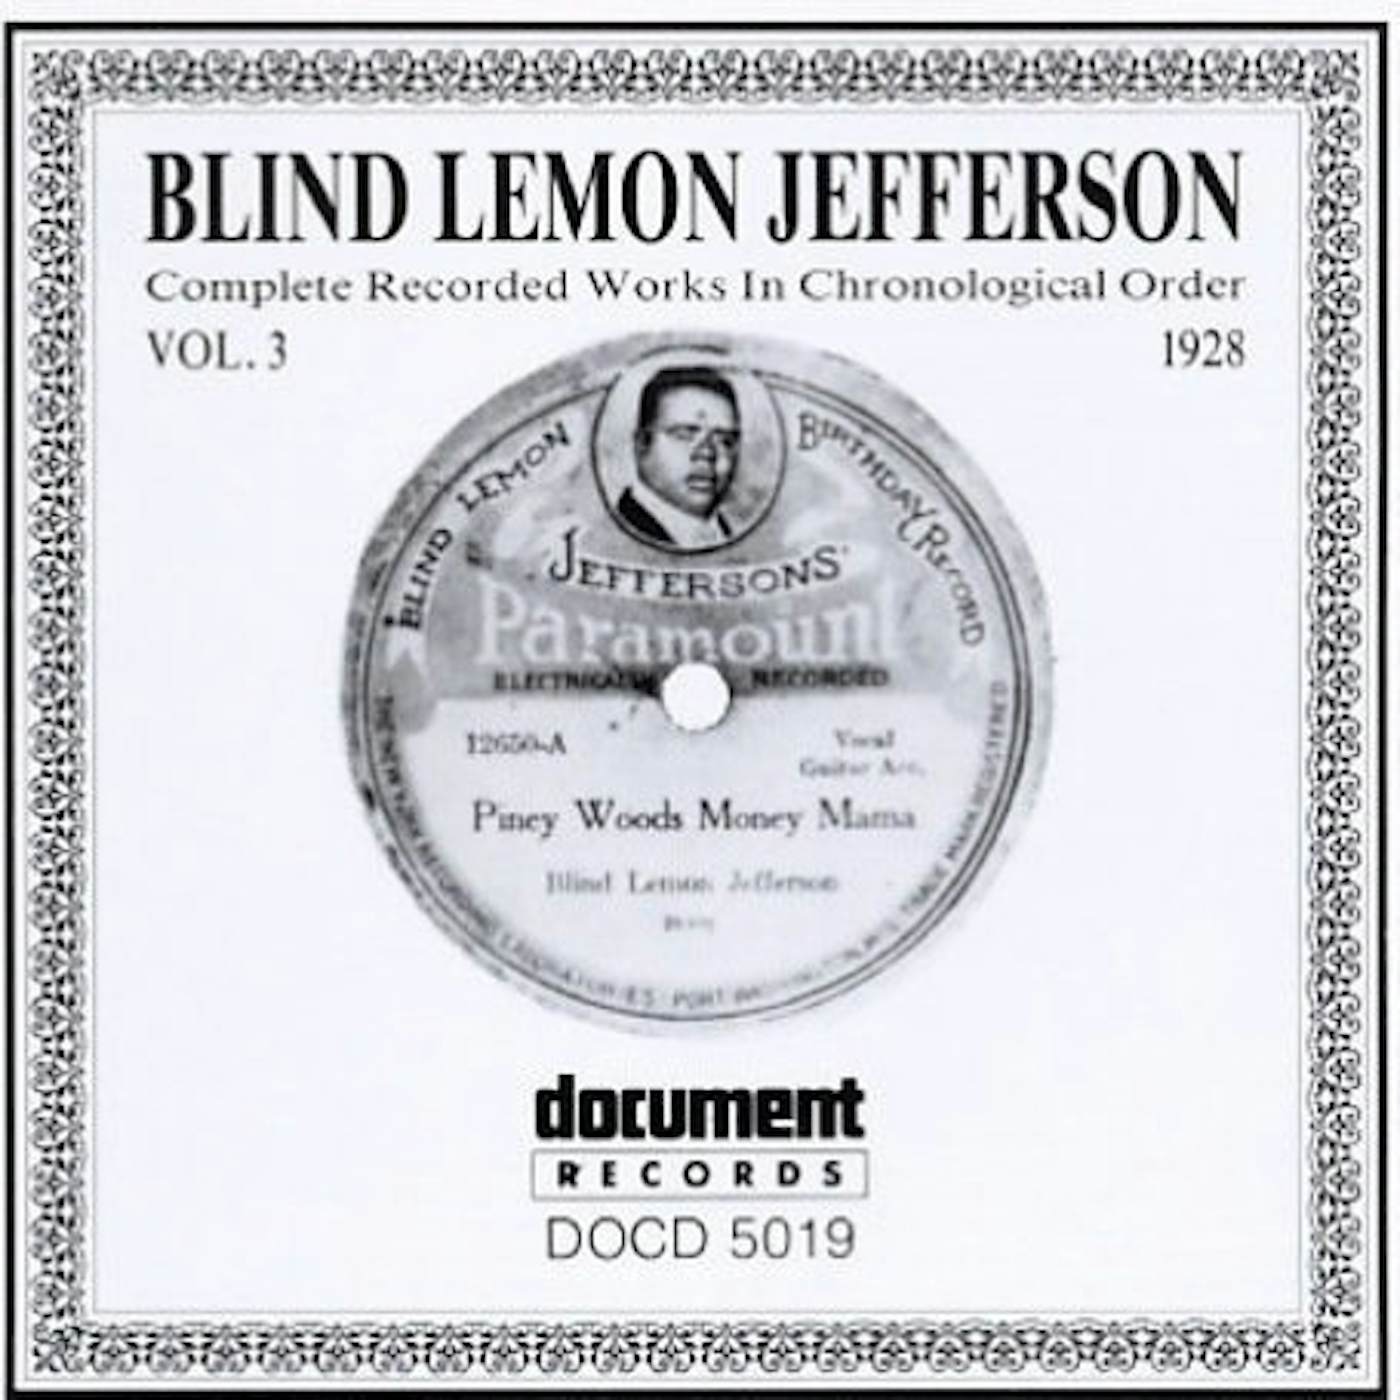 Blind Lemon Jefferson COMPLETE RECORDINGS 1925-1929 VOL. 3 (1928) CD